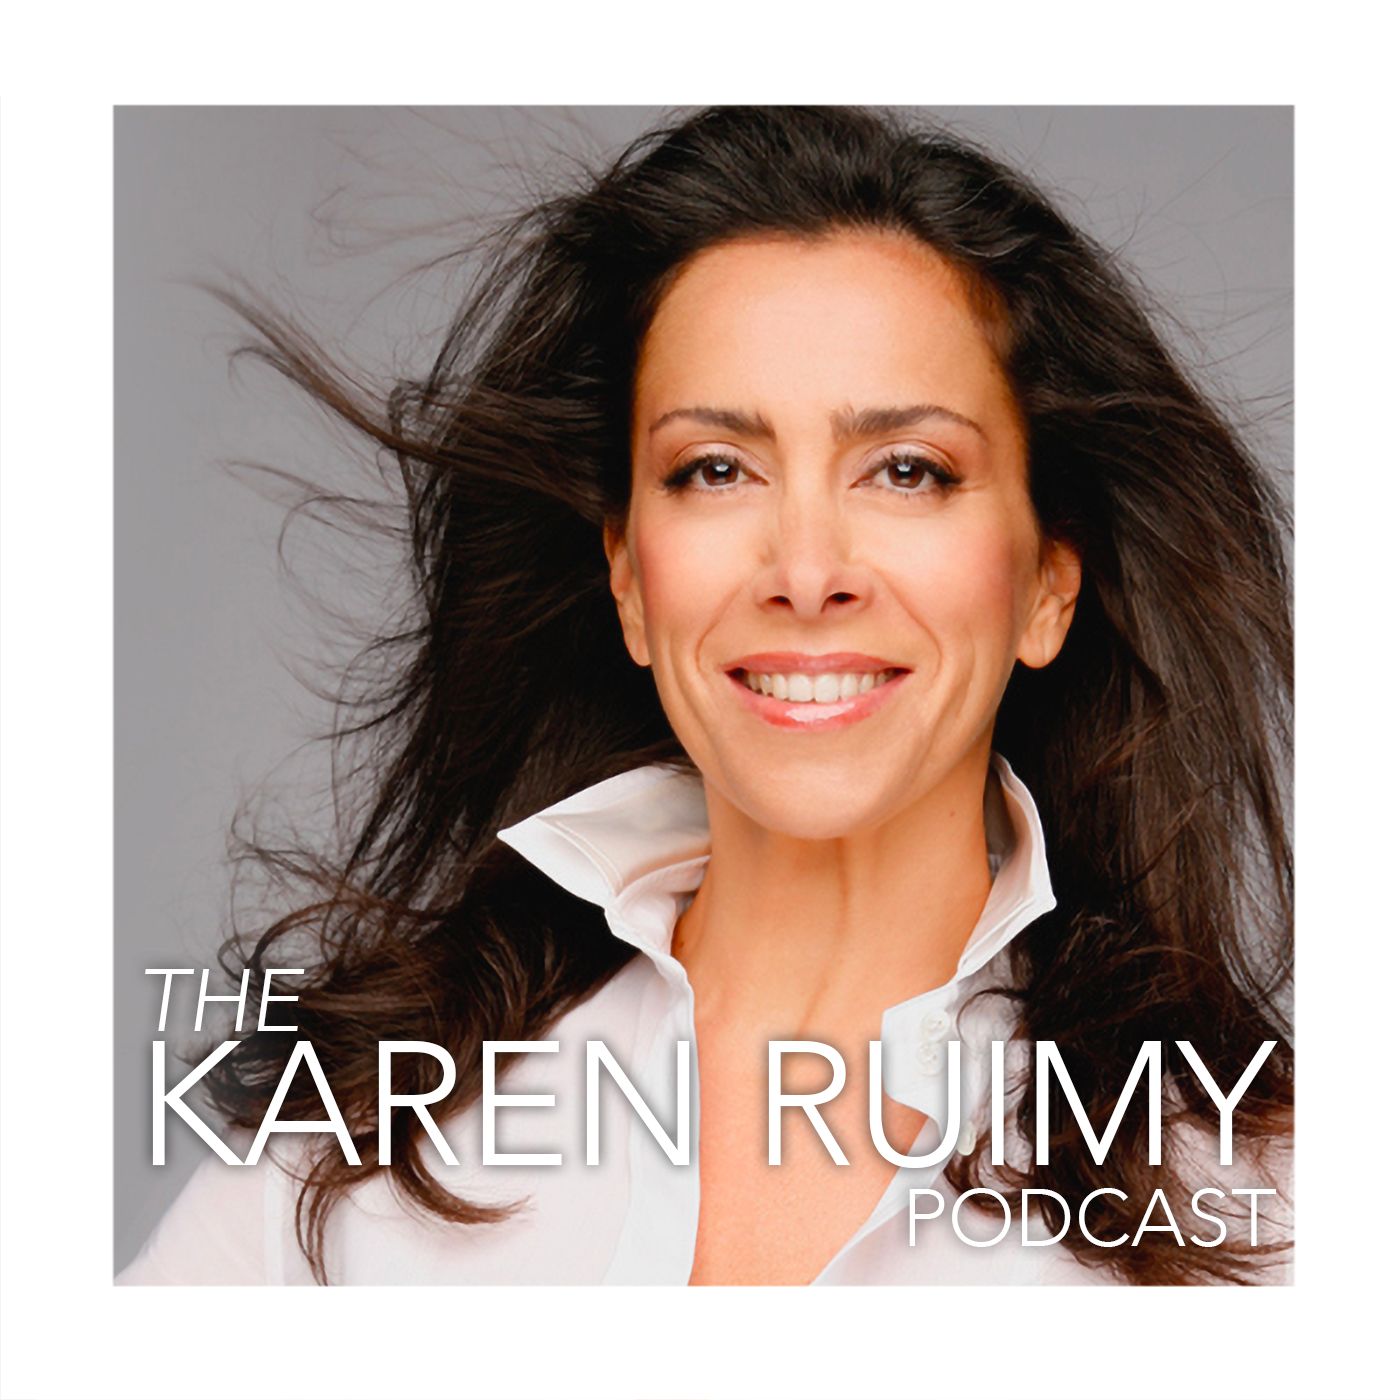 The Karen Ruimy Podcast